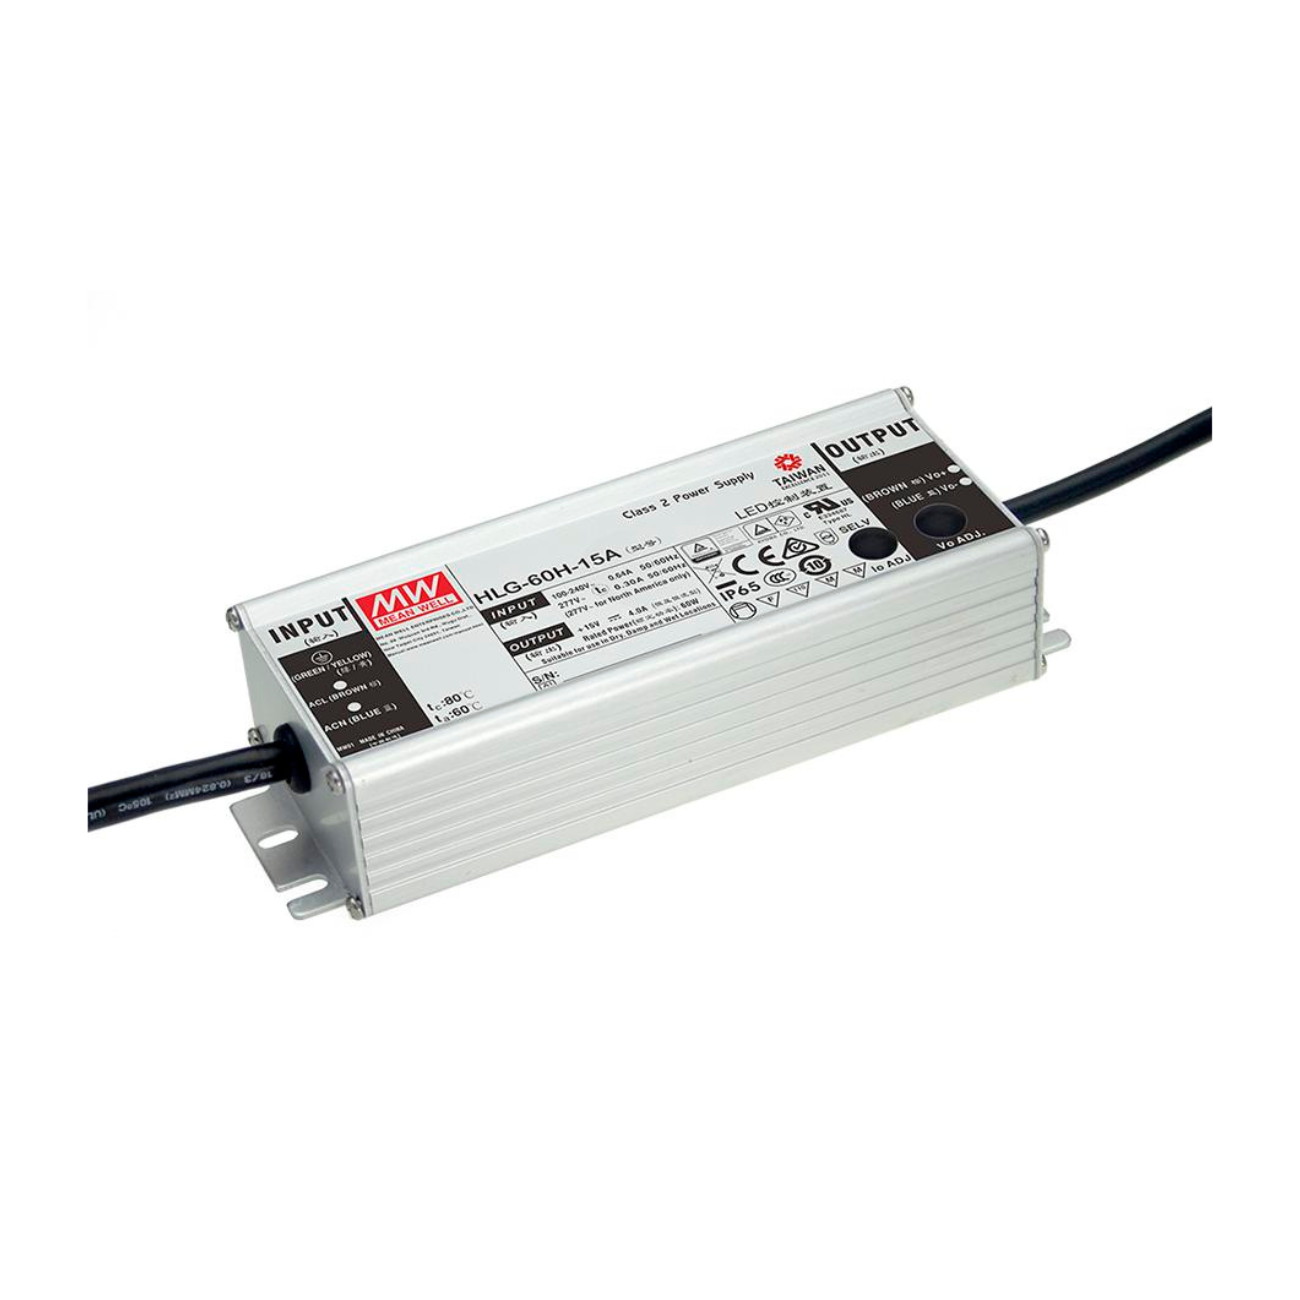 MeanWell HLG-60H-20B (60W/20V) LED-Netzteil (dimmbar)